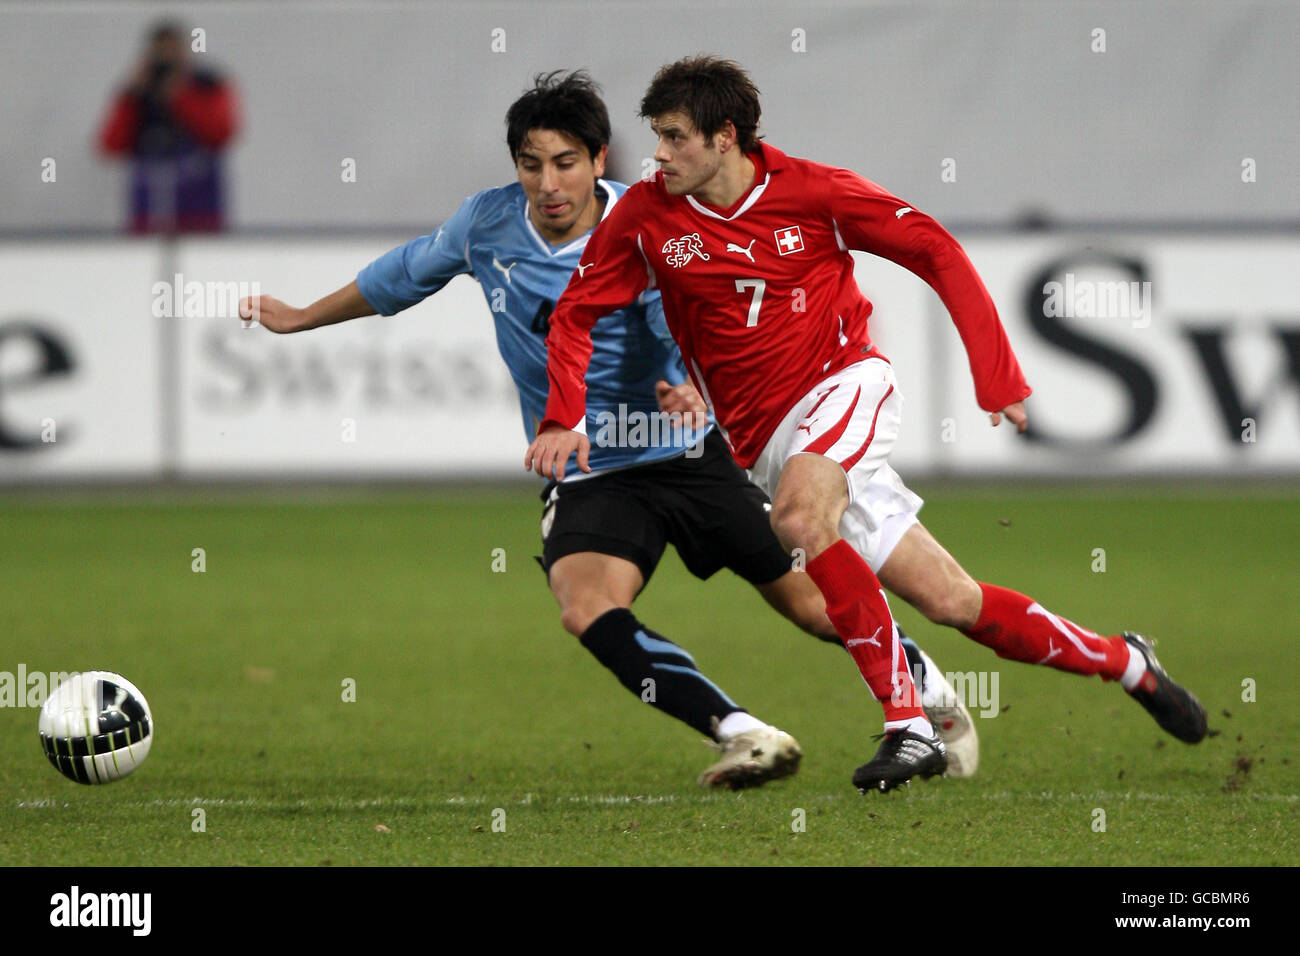 Soccer - International Friendly - Switzerland v Uruguay - AFG Arena. Switzerland's Tranquillo Barnetta (r) takes on Uruguay's Jorge Fucile Stock Photo